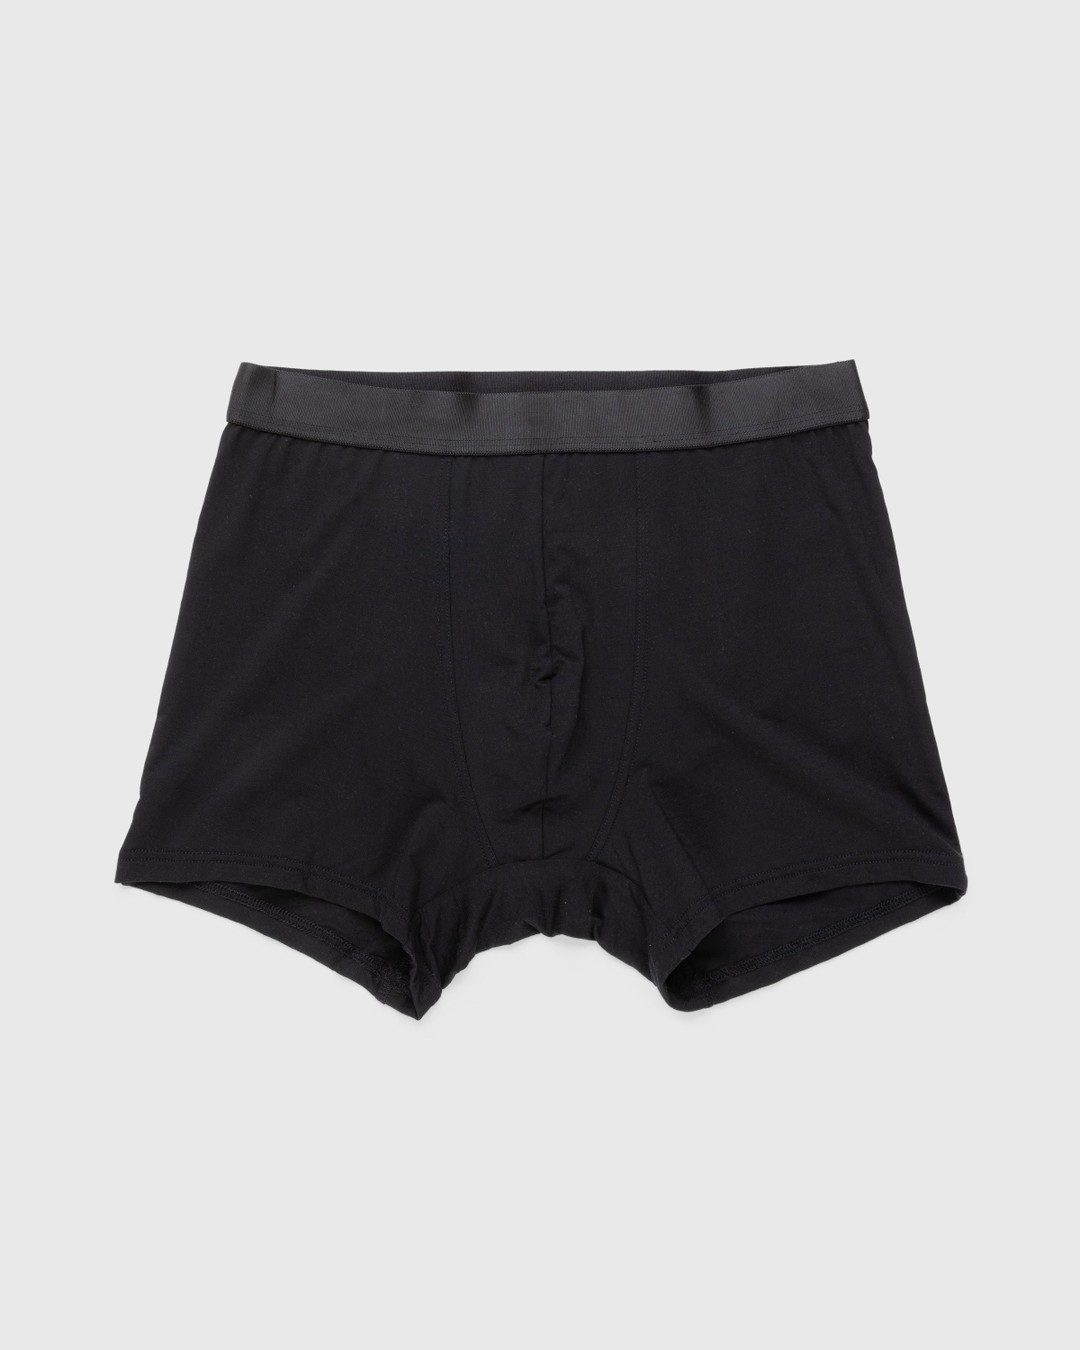 CDLP – Boxer Briefs 3-Pack - Underwear & Loungewear - Multi - Image 2